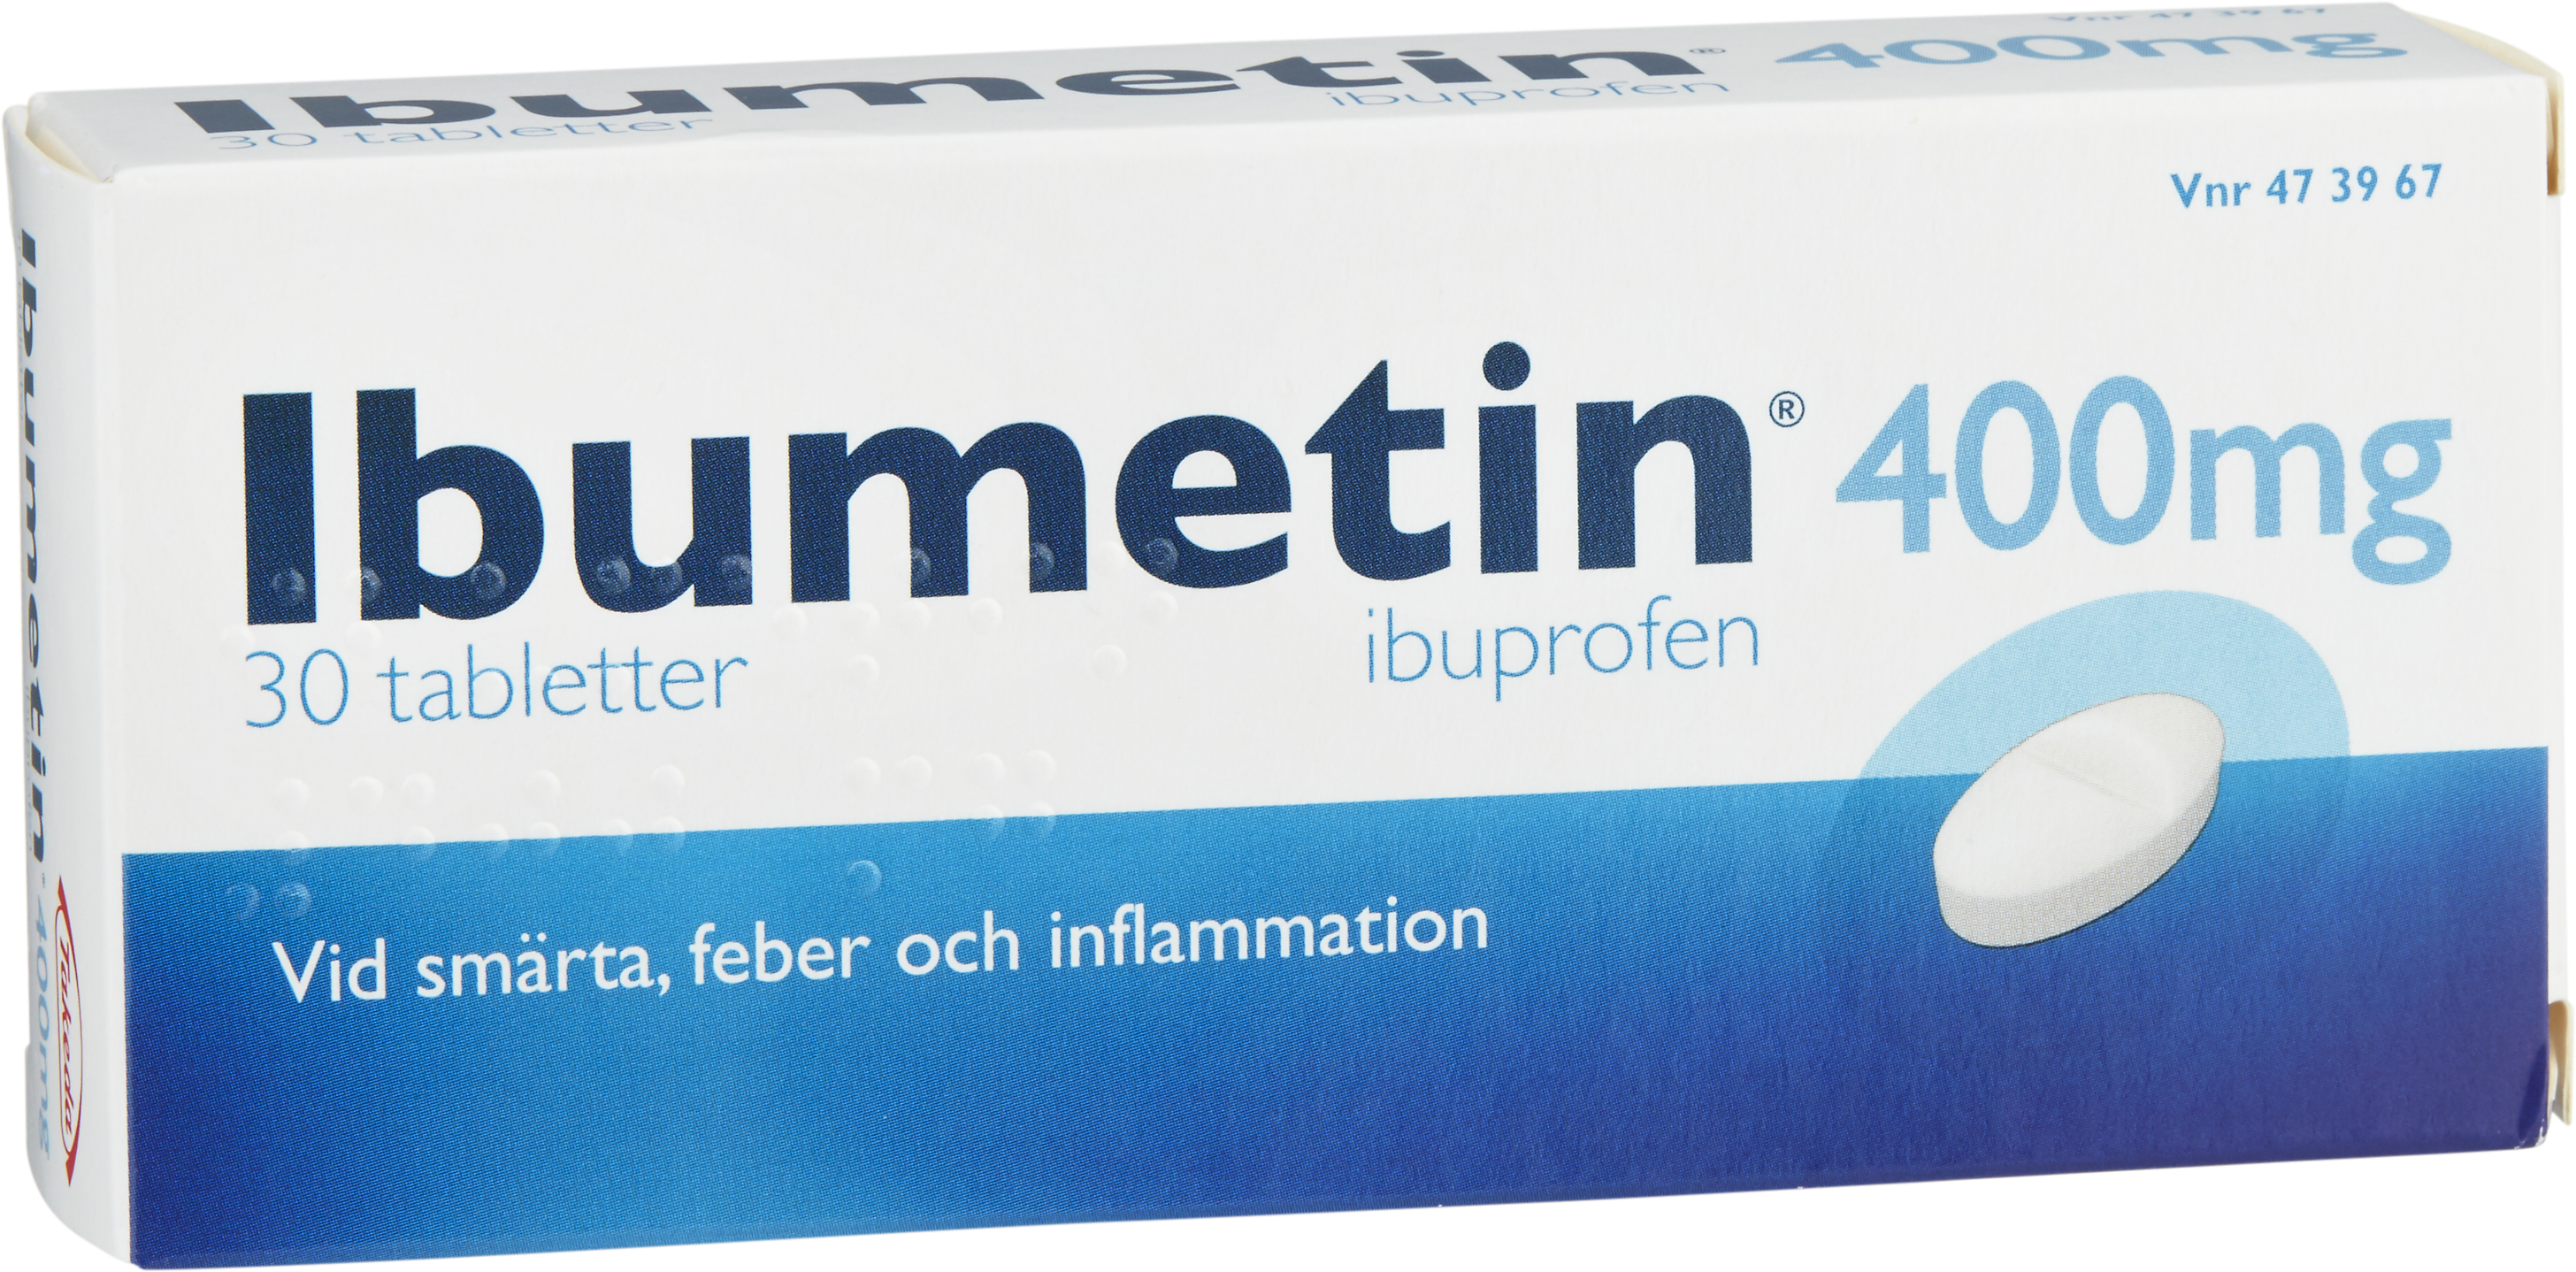 Ibumetin® Tablett 400mg Blister, 30tabletter